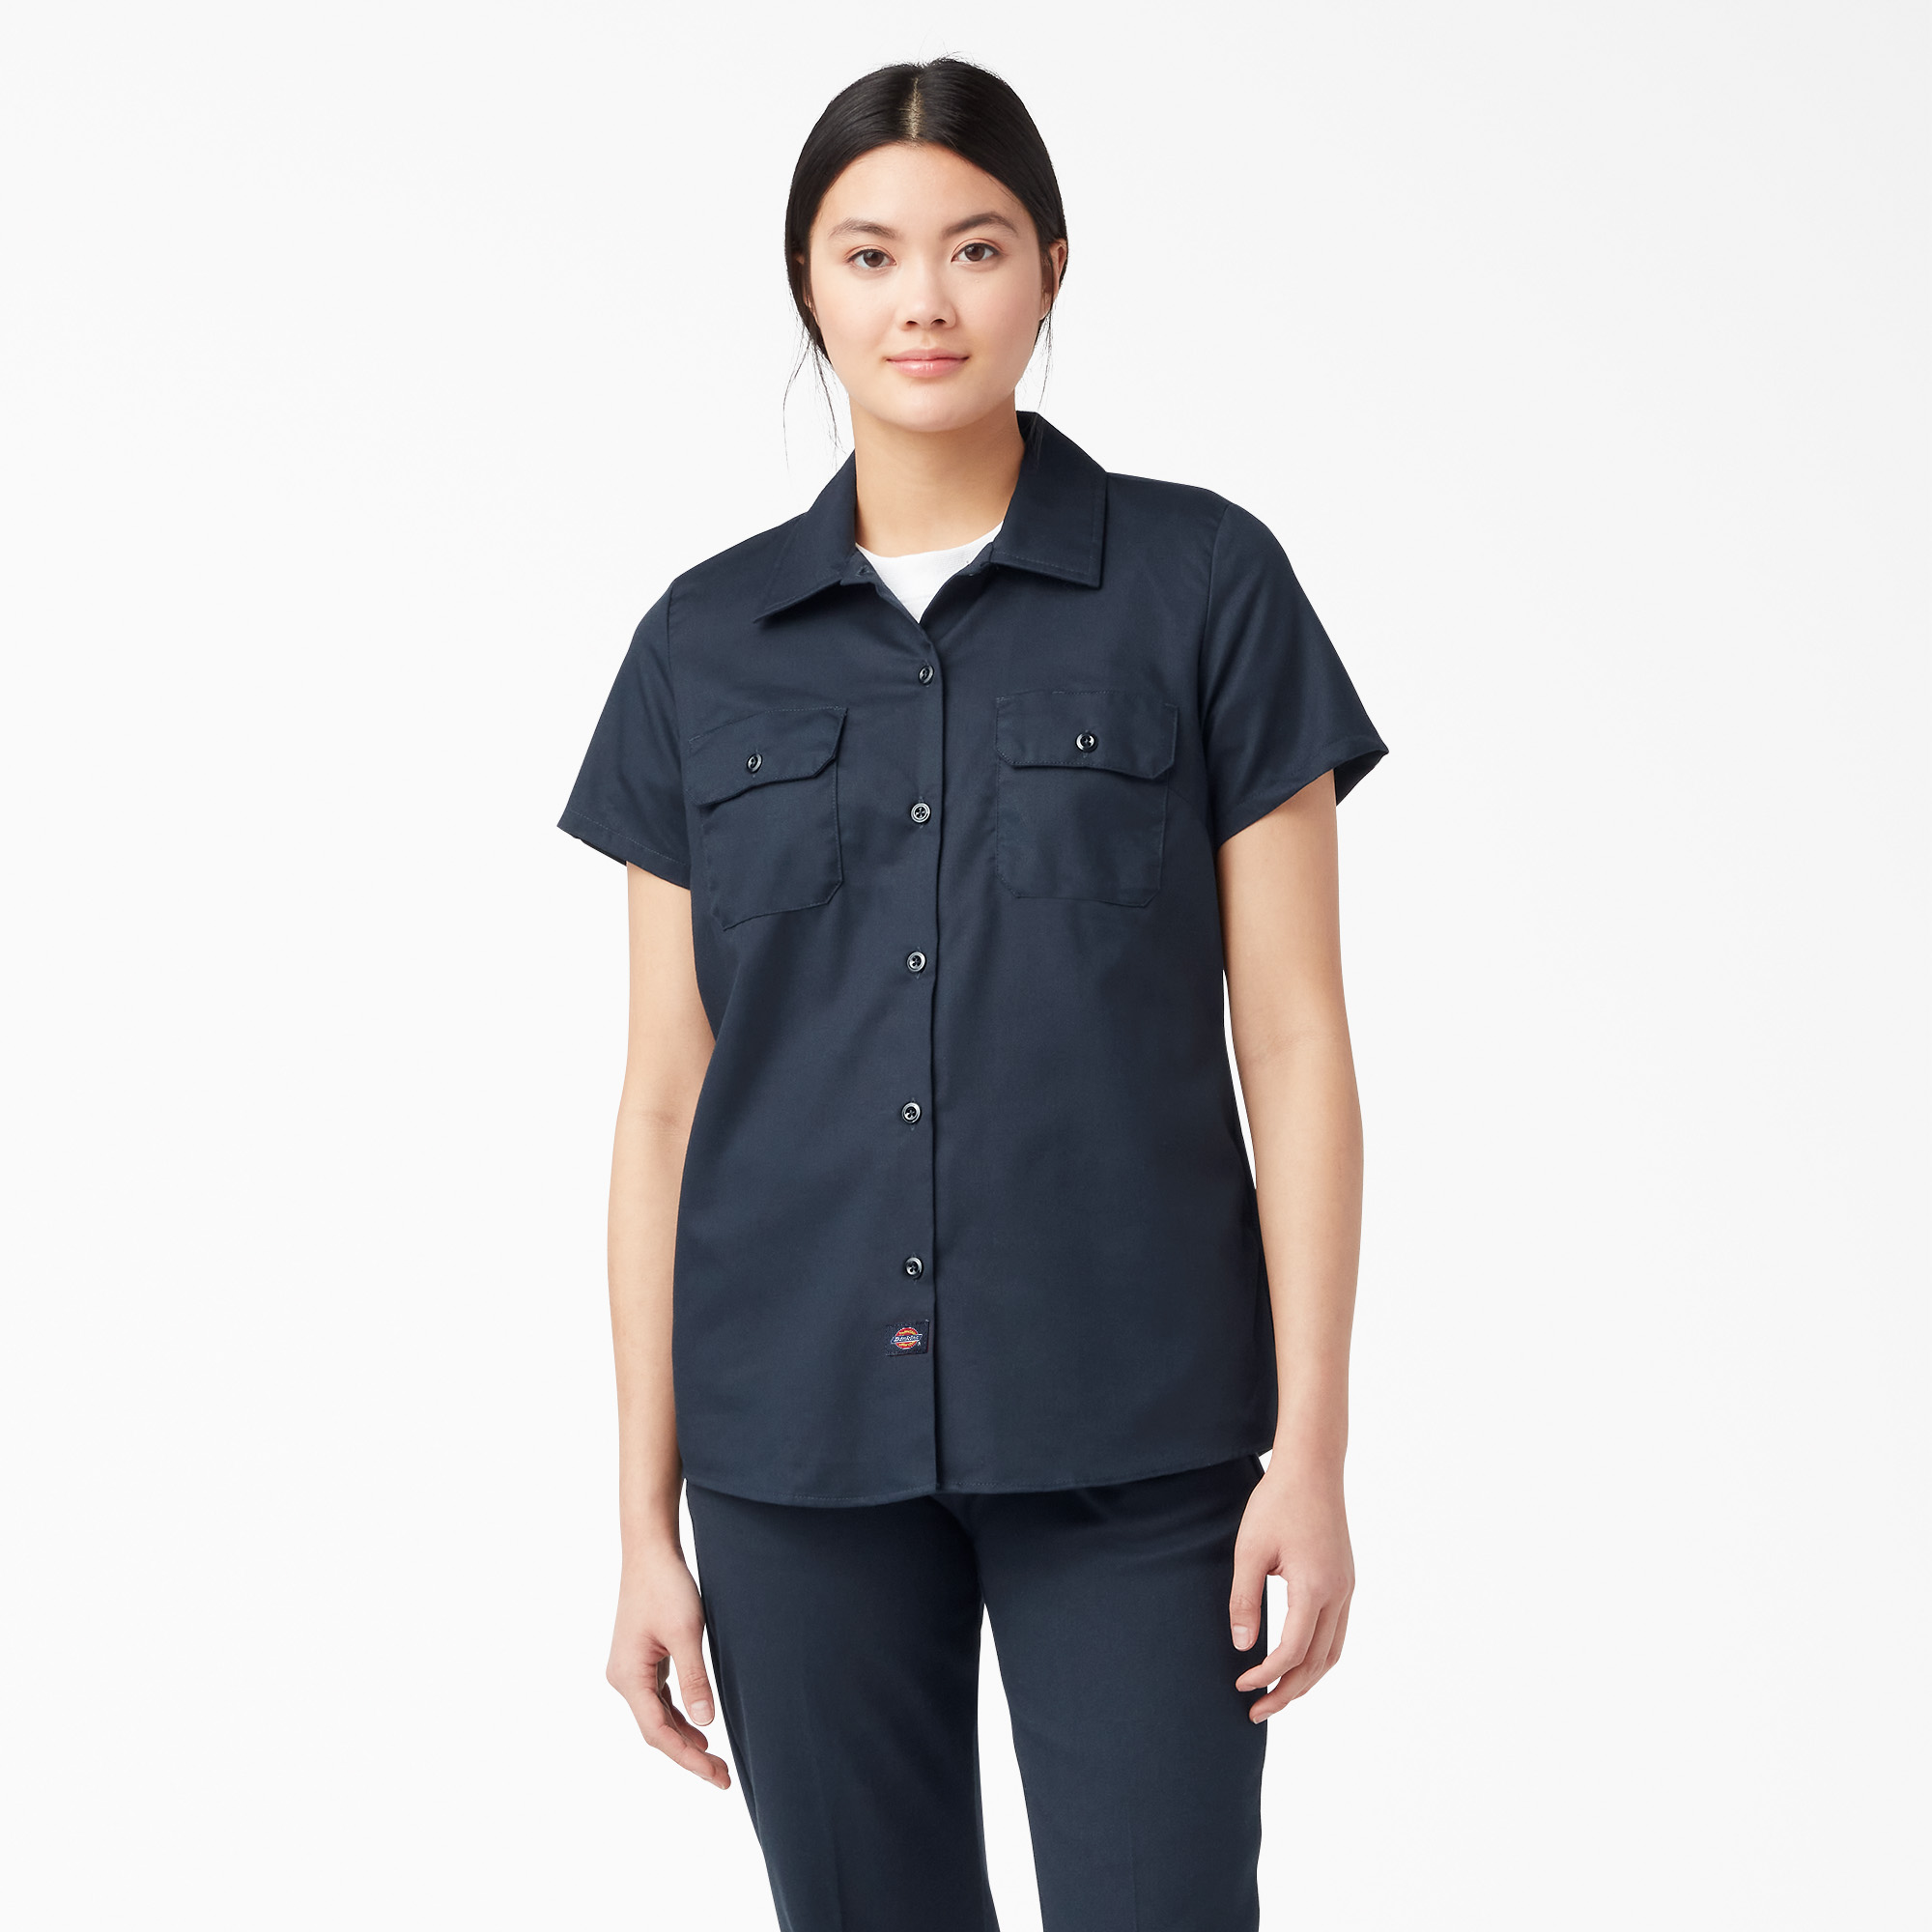 Women's Short Sleeve Work Shirt - Dark Navy (DN)